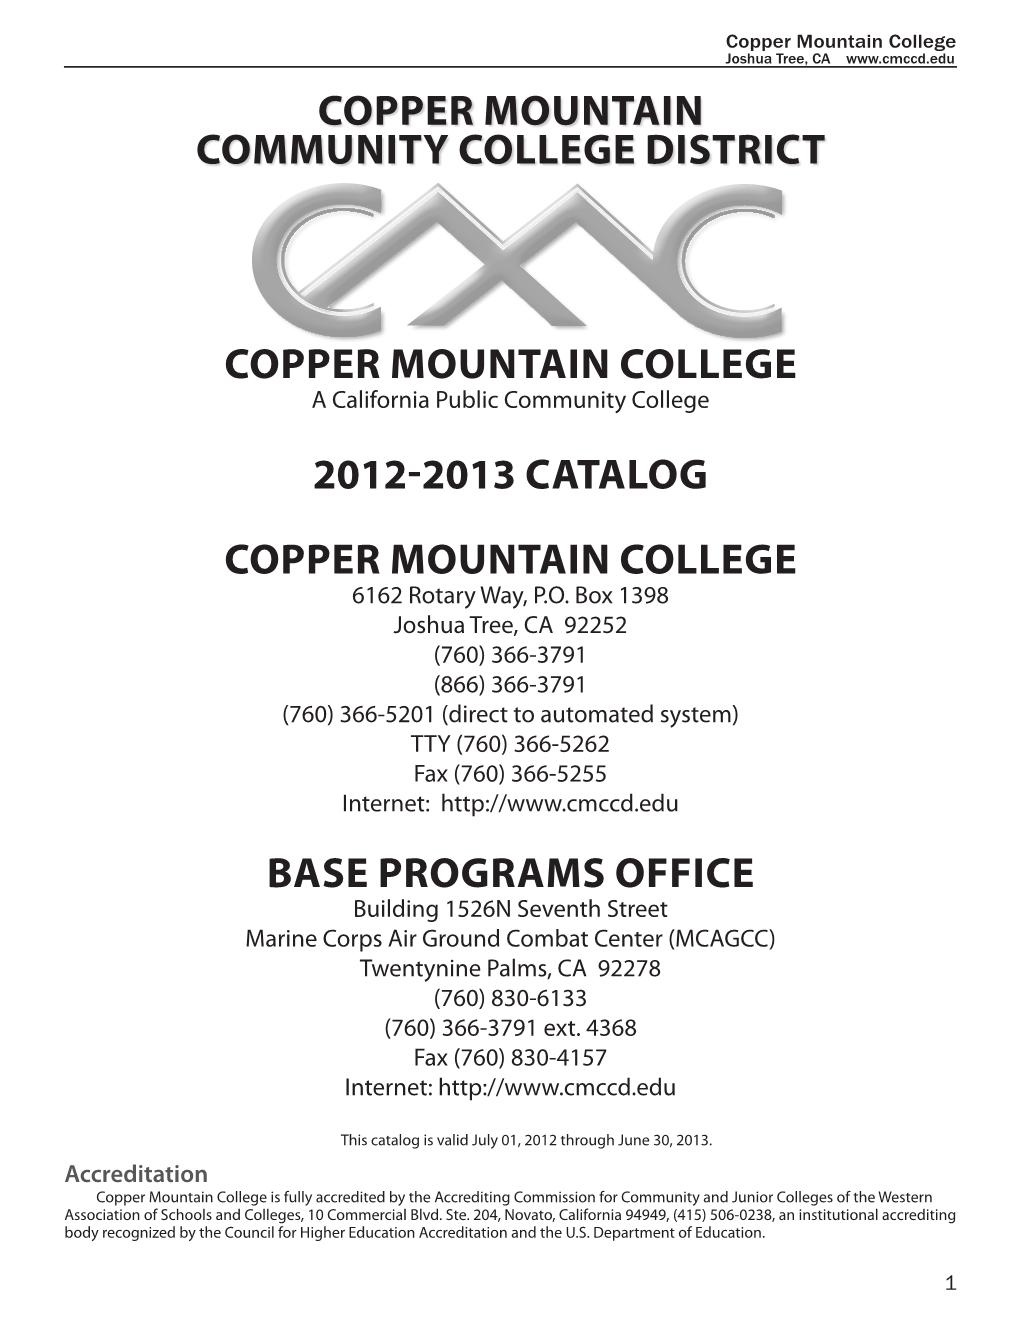 Copper Mountain Community College District